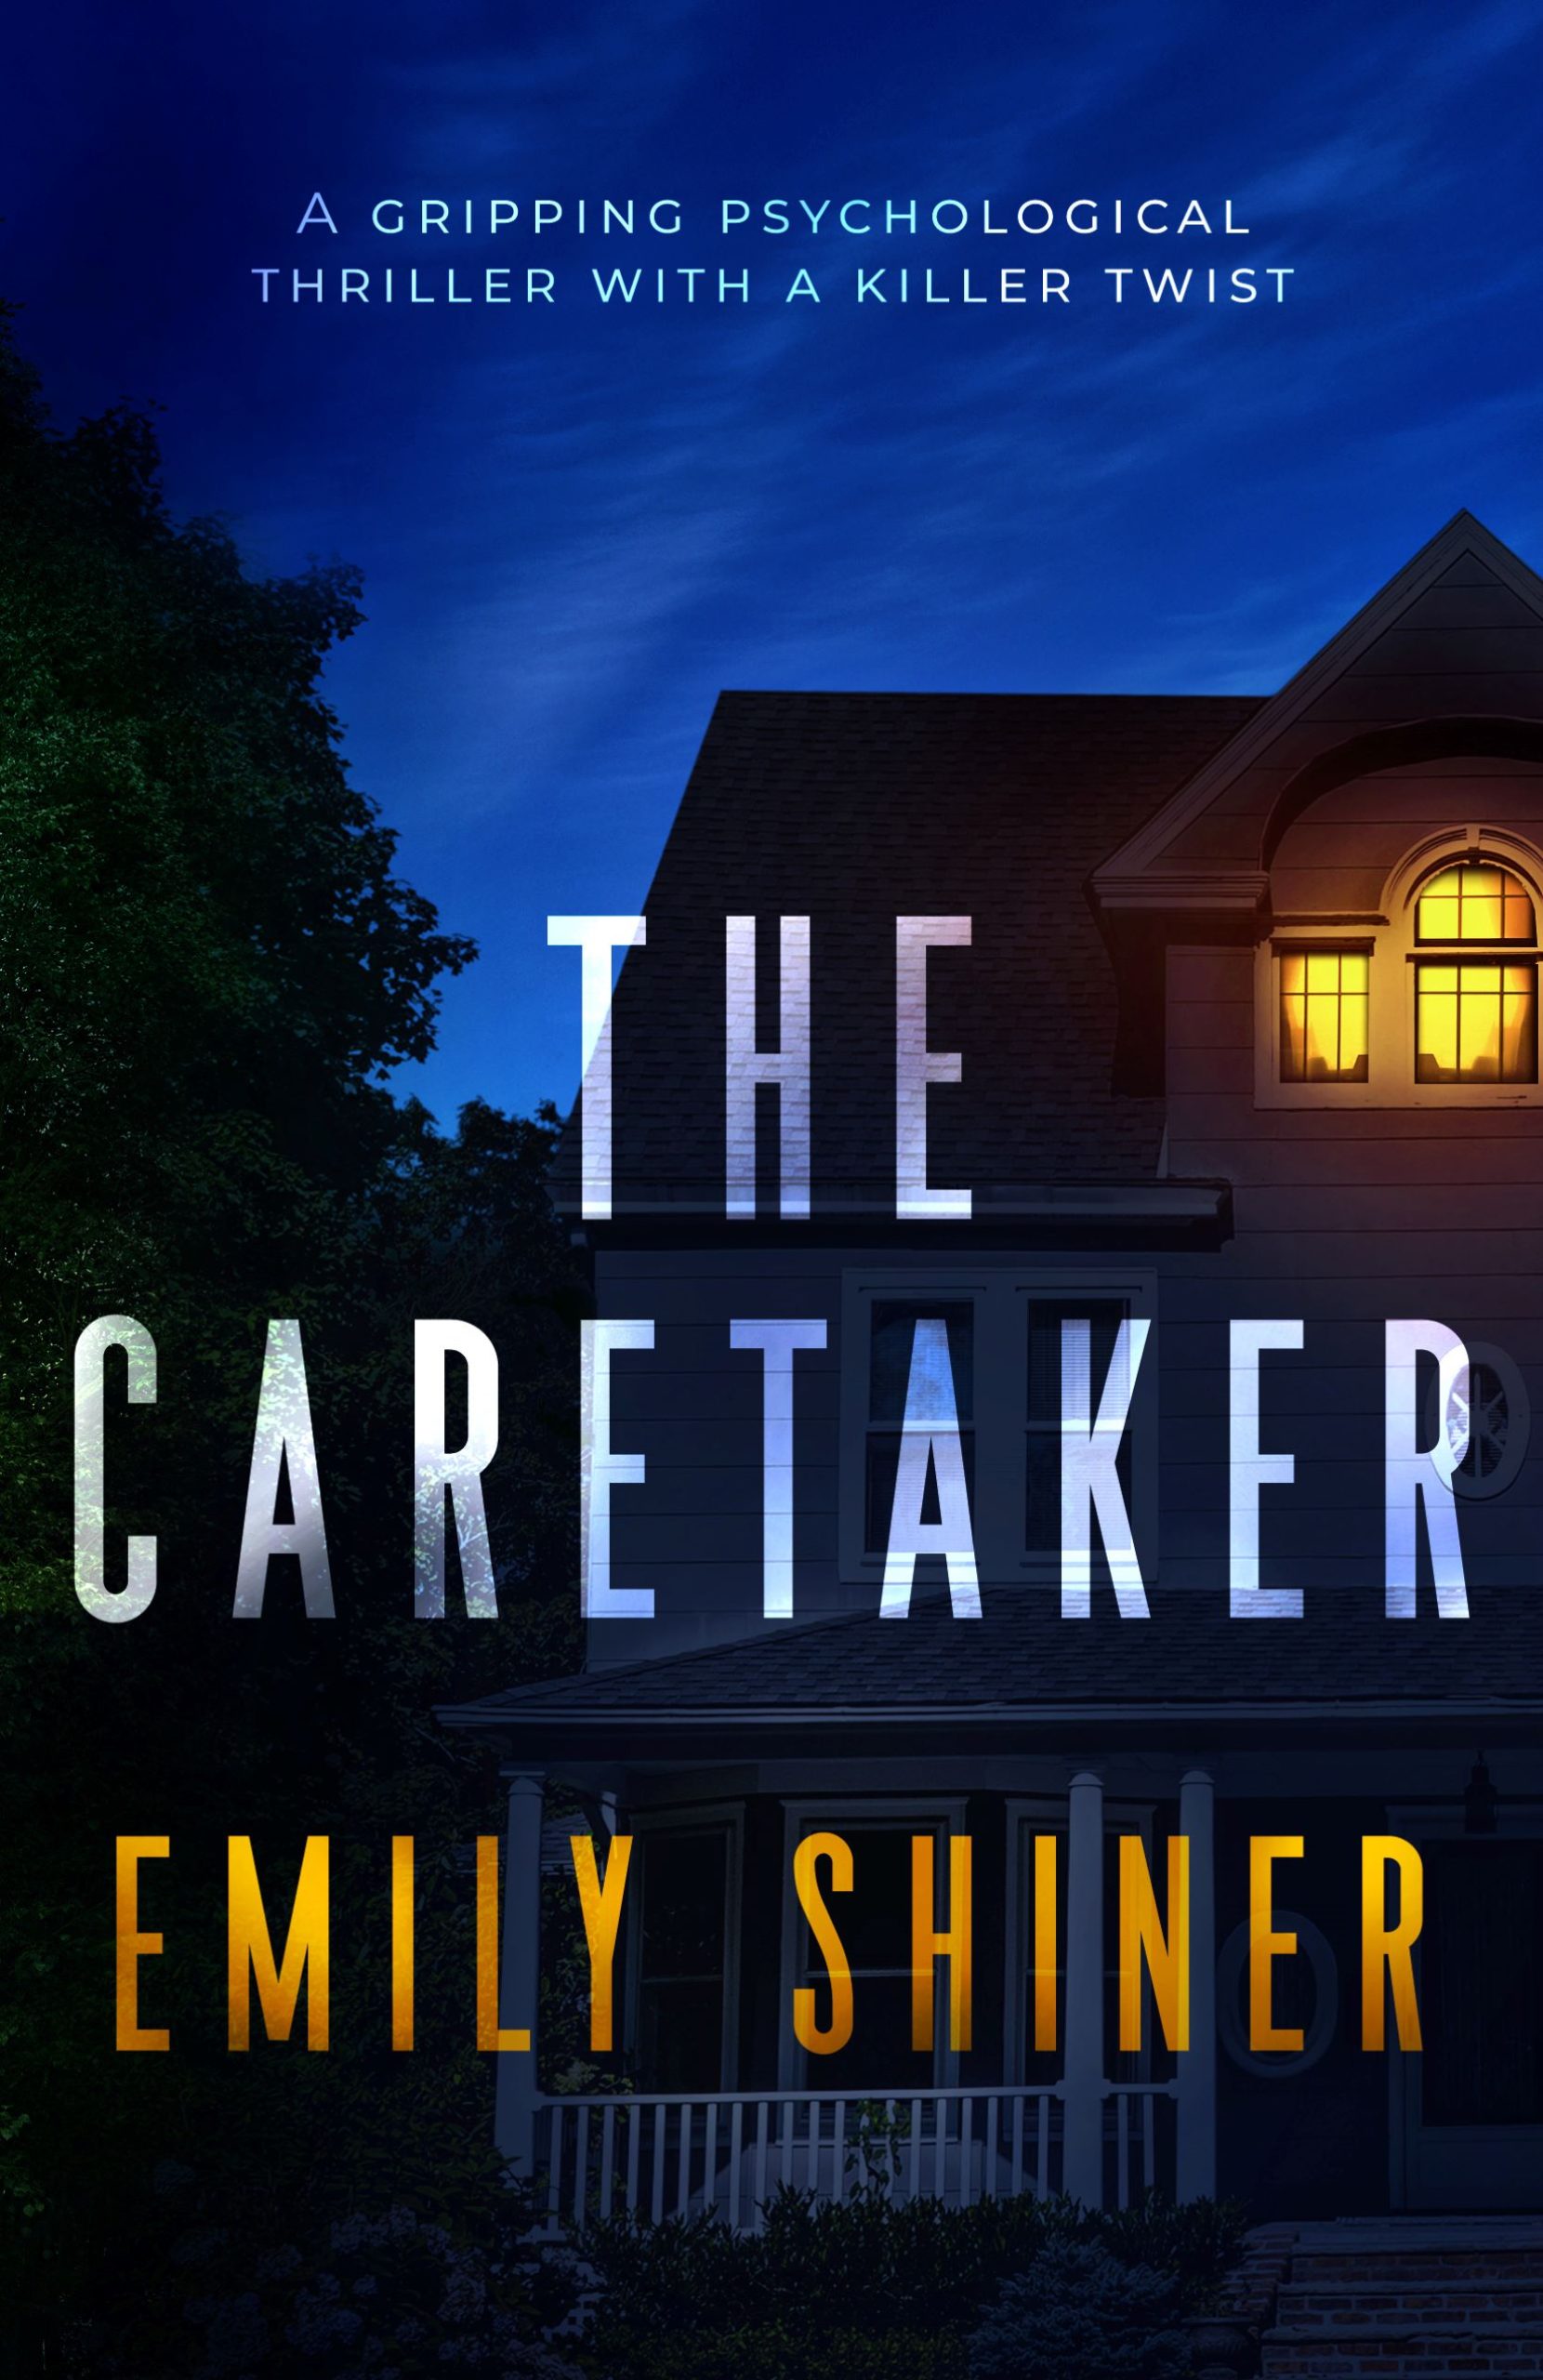 EMILY SHINER NEW RELEASE – THE CARETAKER